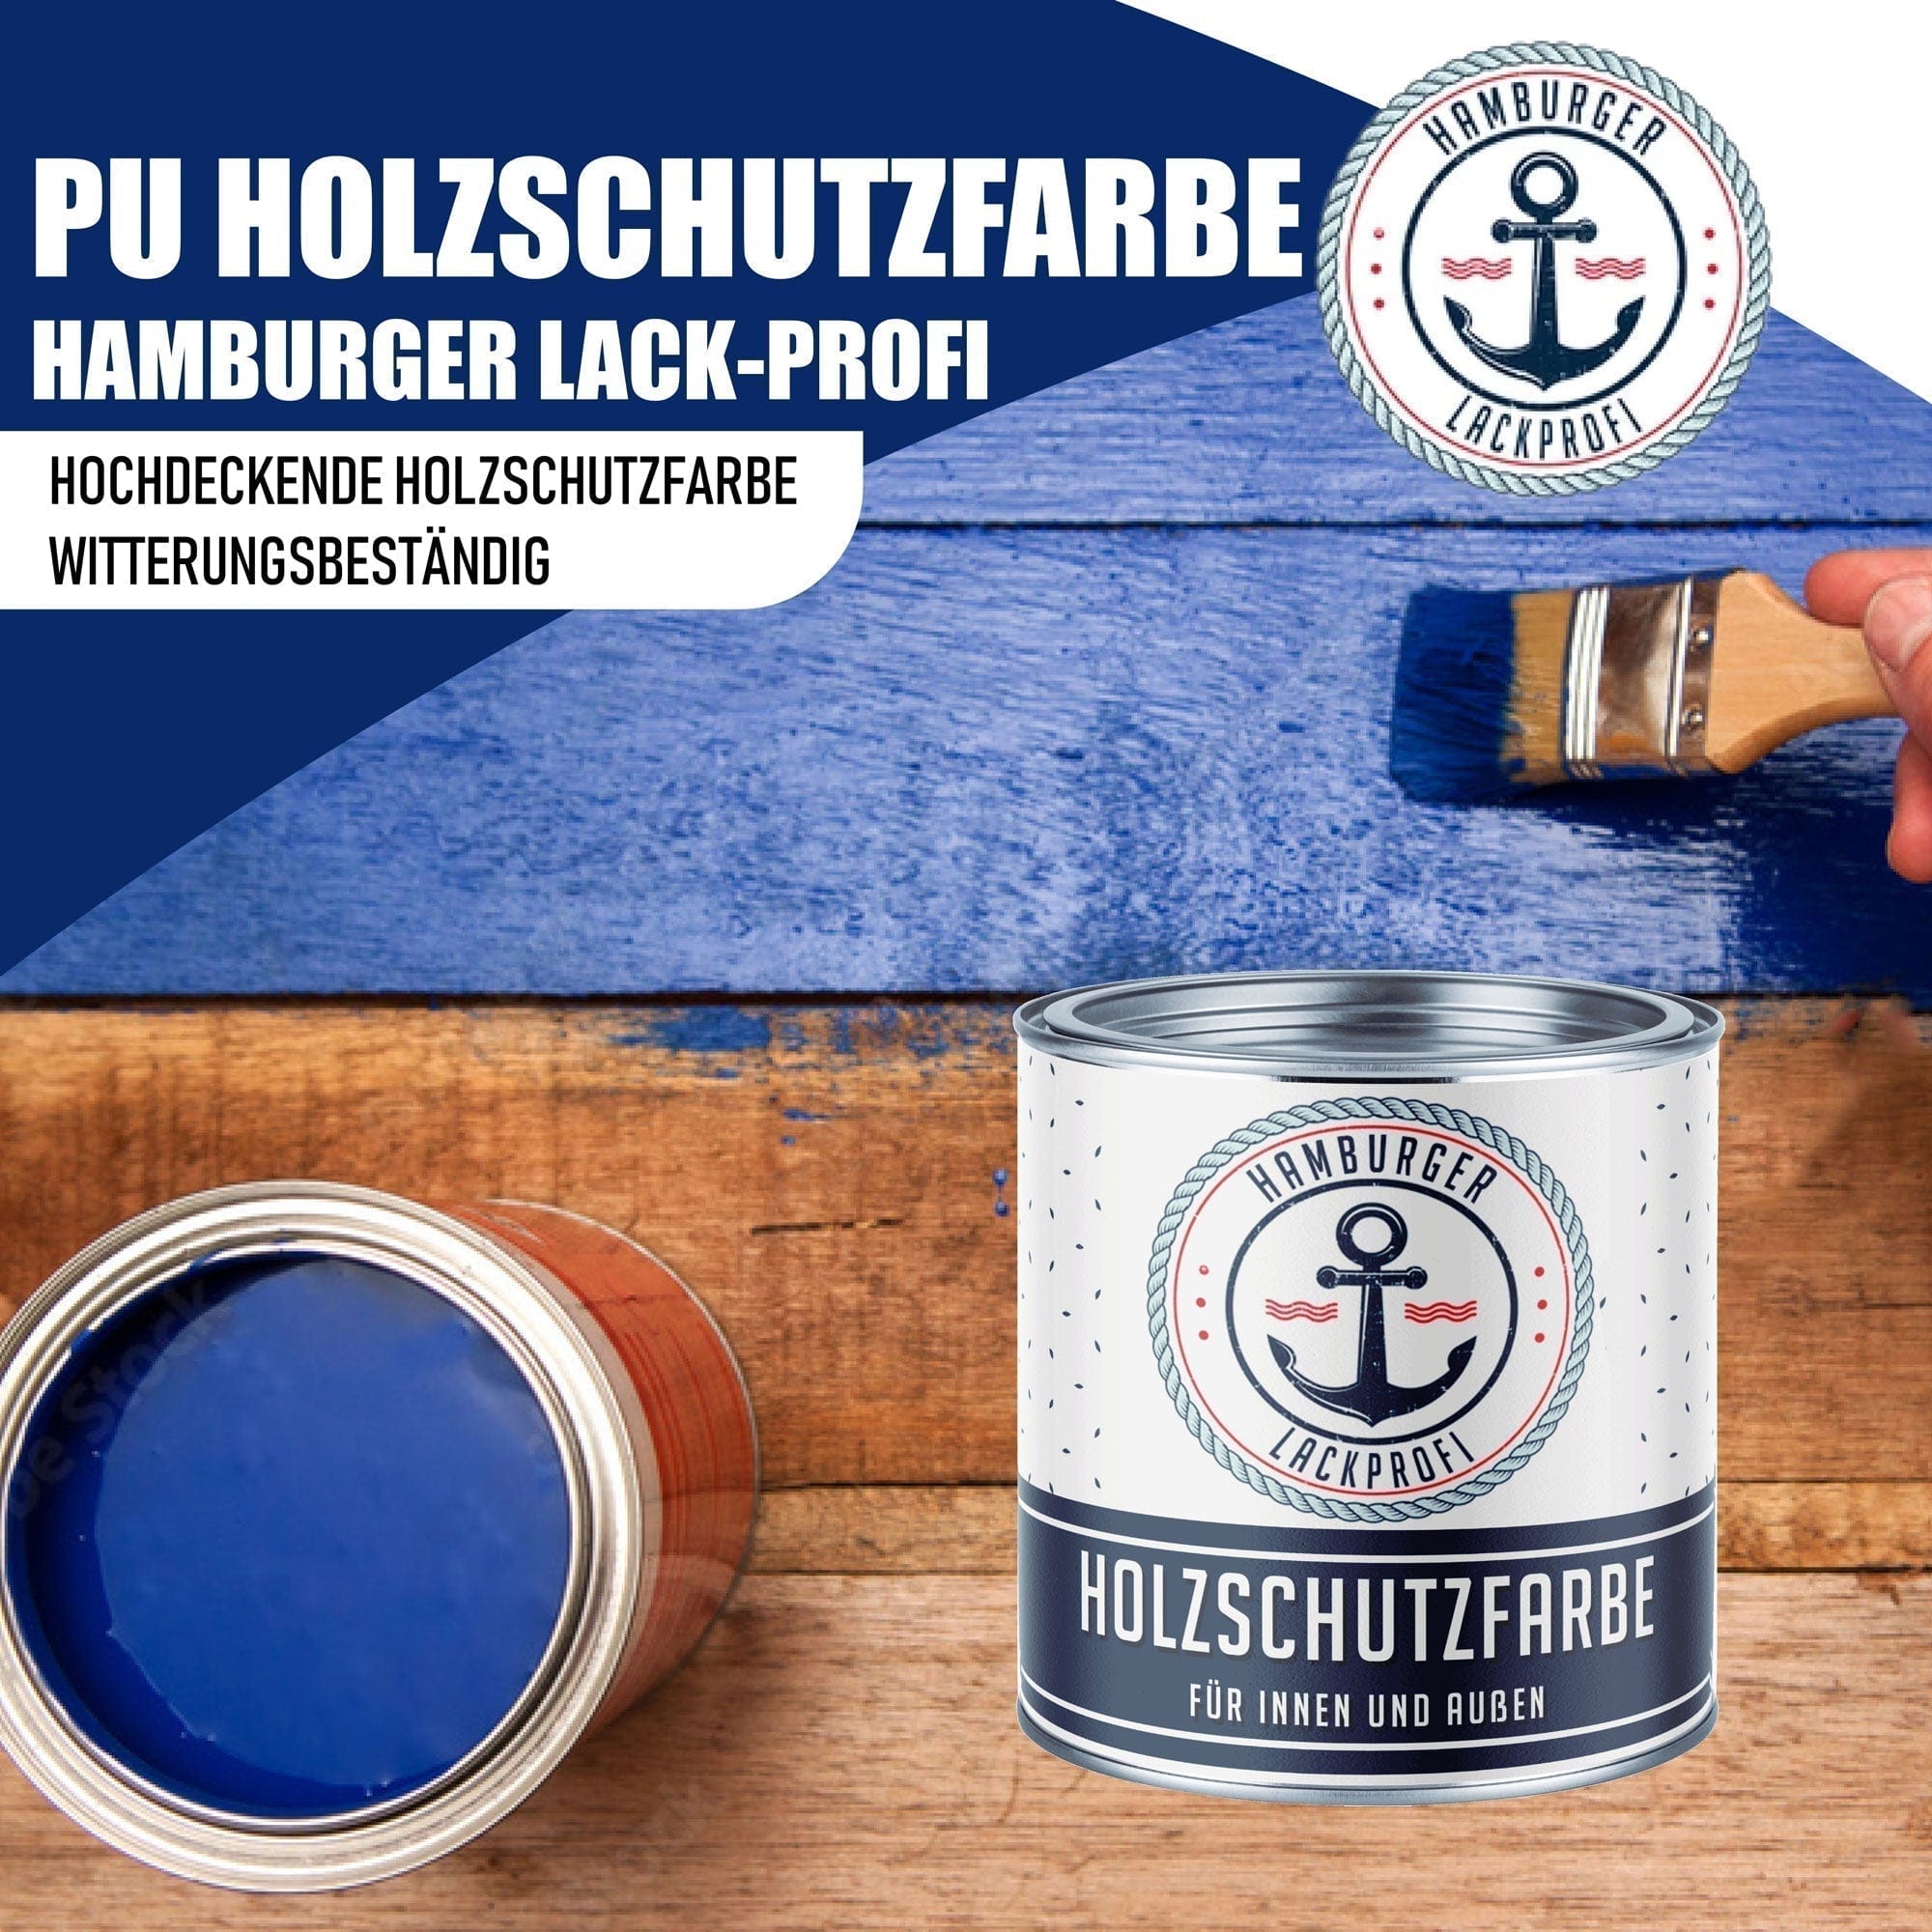 Hamburger Lack-Profi Lacke & Beschichtungen PU Holzschutzfarbe RAL 5001 Grünblau - Wetterschutzfarbe